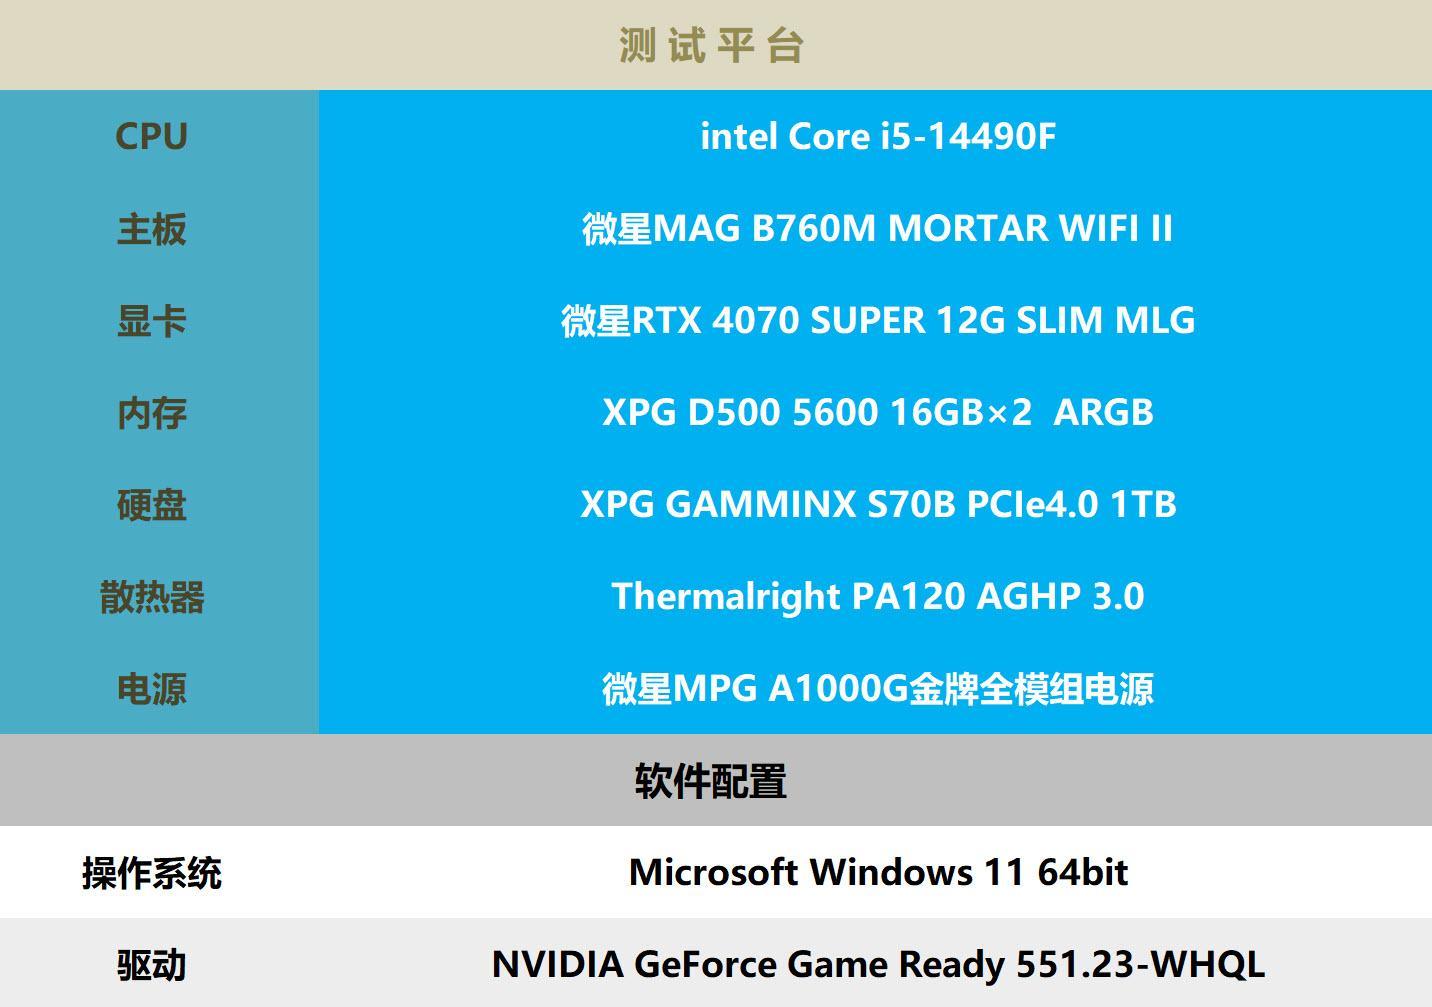 DDR3 vs DDR4显卡：性能、功耗、价格全面对比  第1张